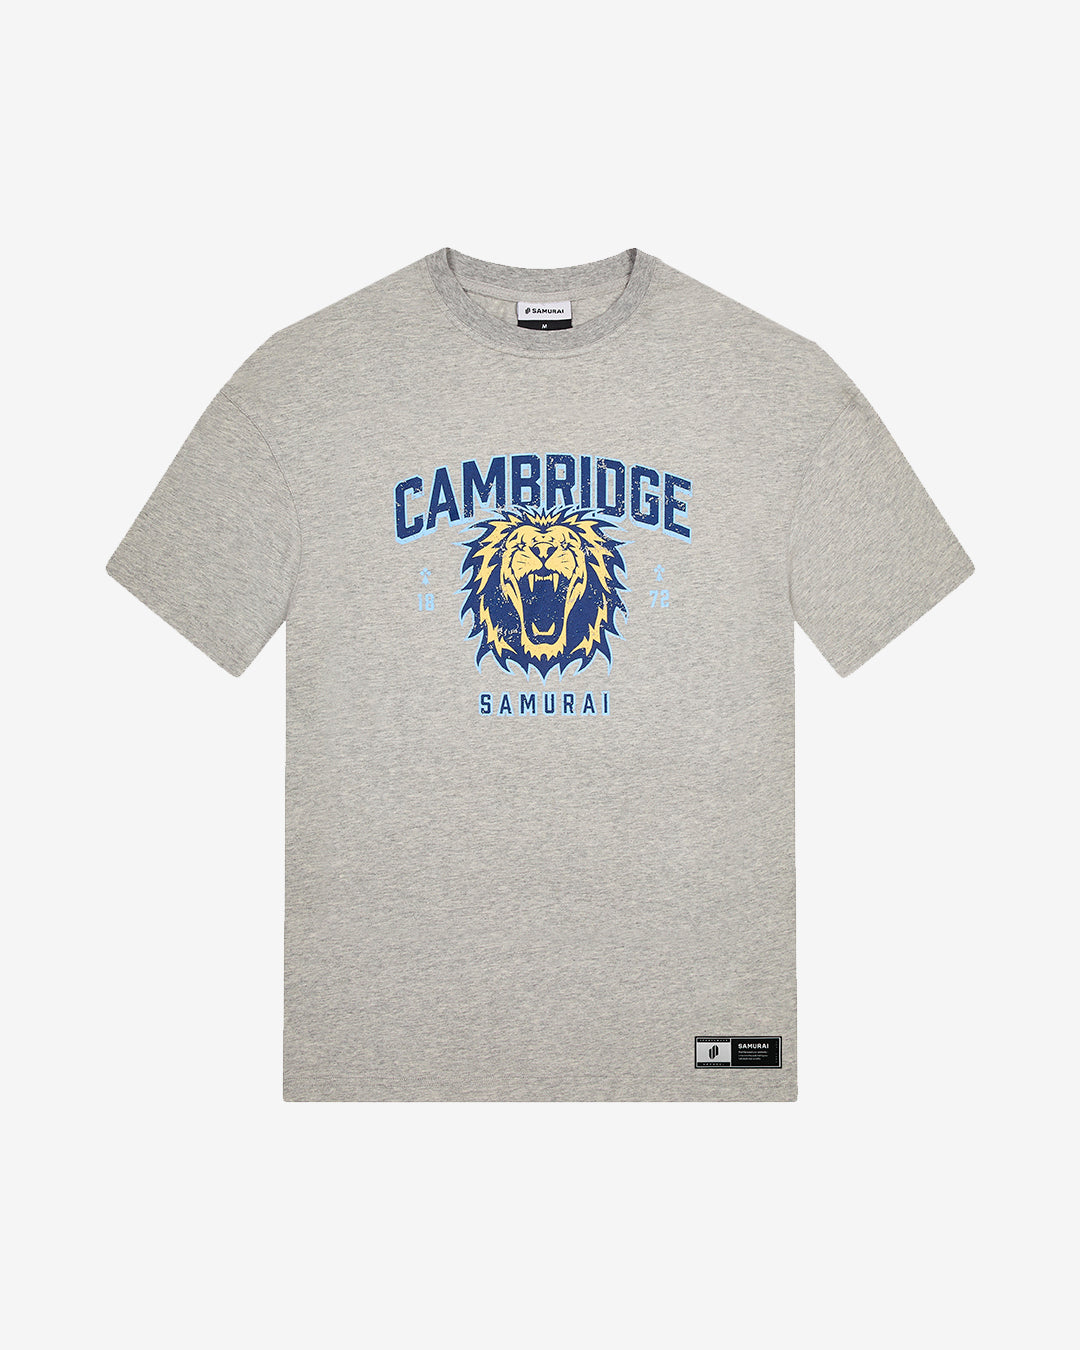 OC: 00-16 - Women's Cambridge T-Shirt - Grey